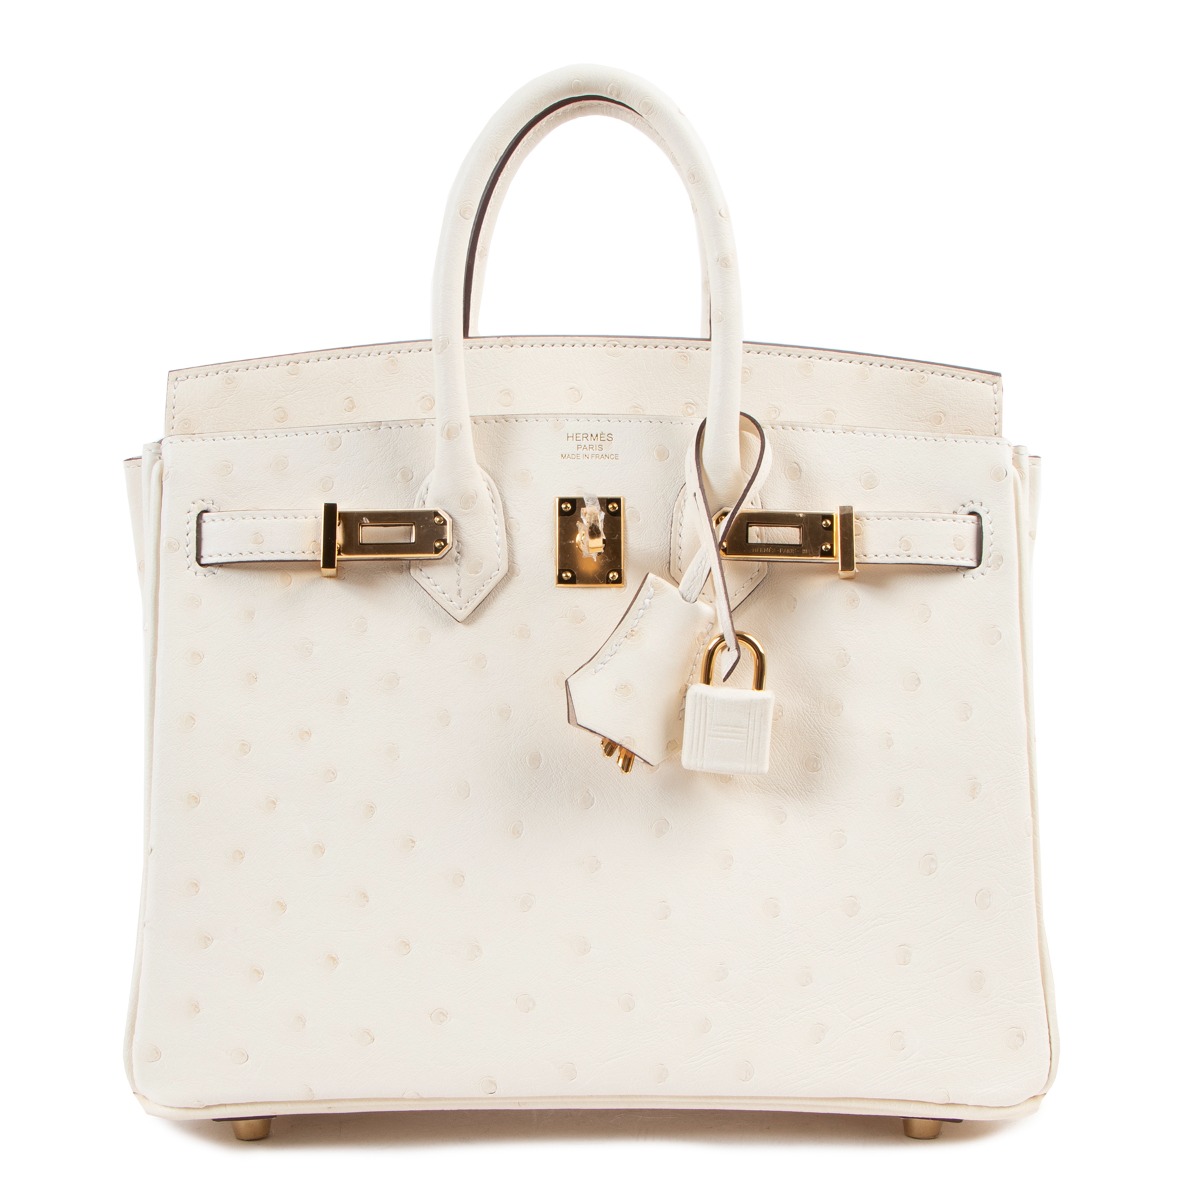 Hermès - Authenticated Birkin 25 Handbag - Ostrich Gold Plain for Women, Never Worn